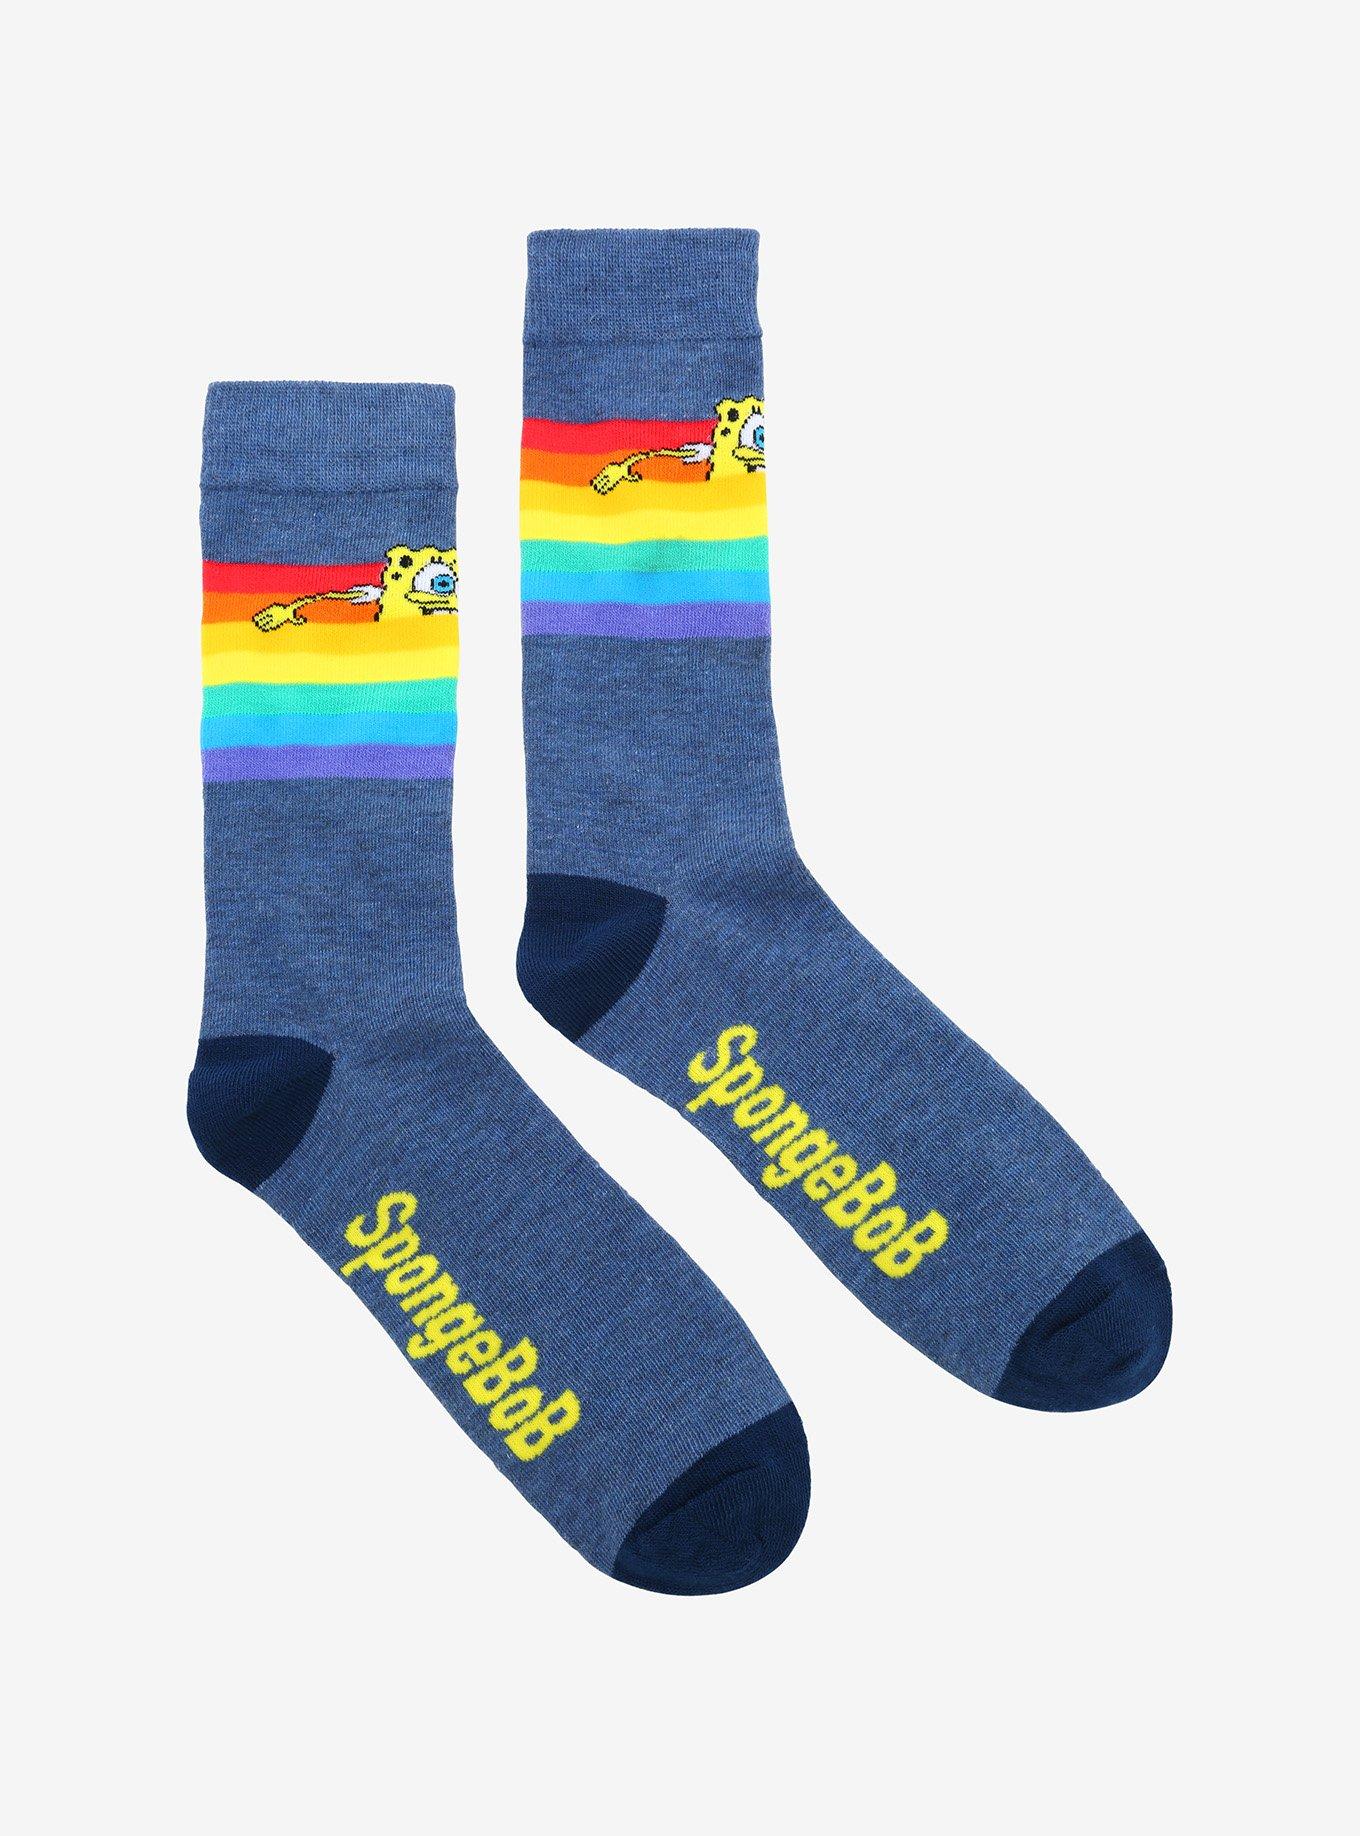 SpongeBob SquarePants Rainbow Crew Socks, , alternate